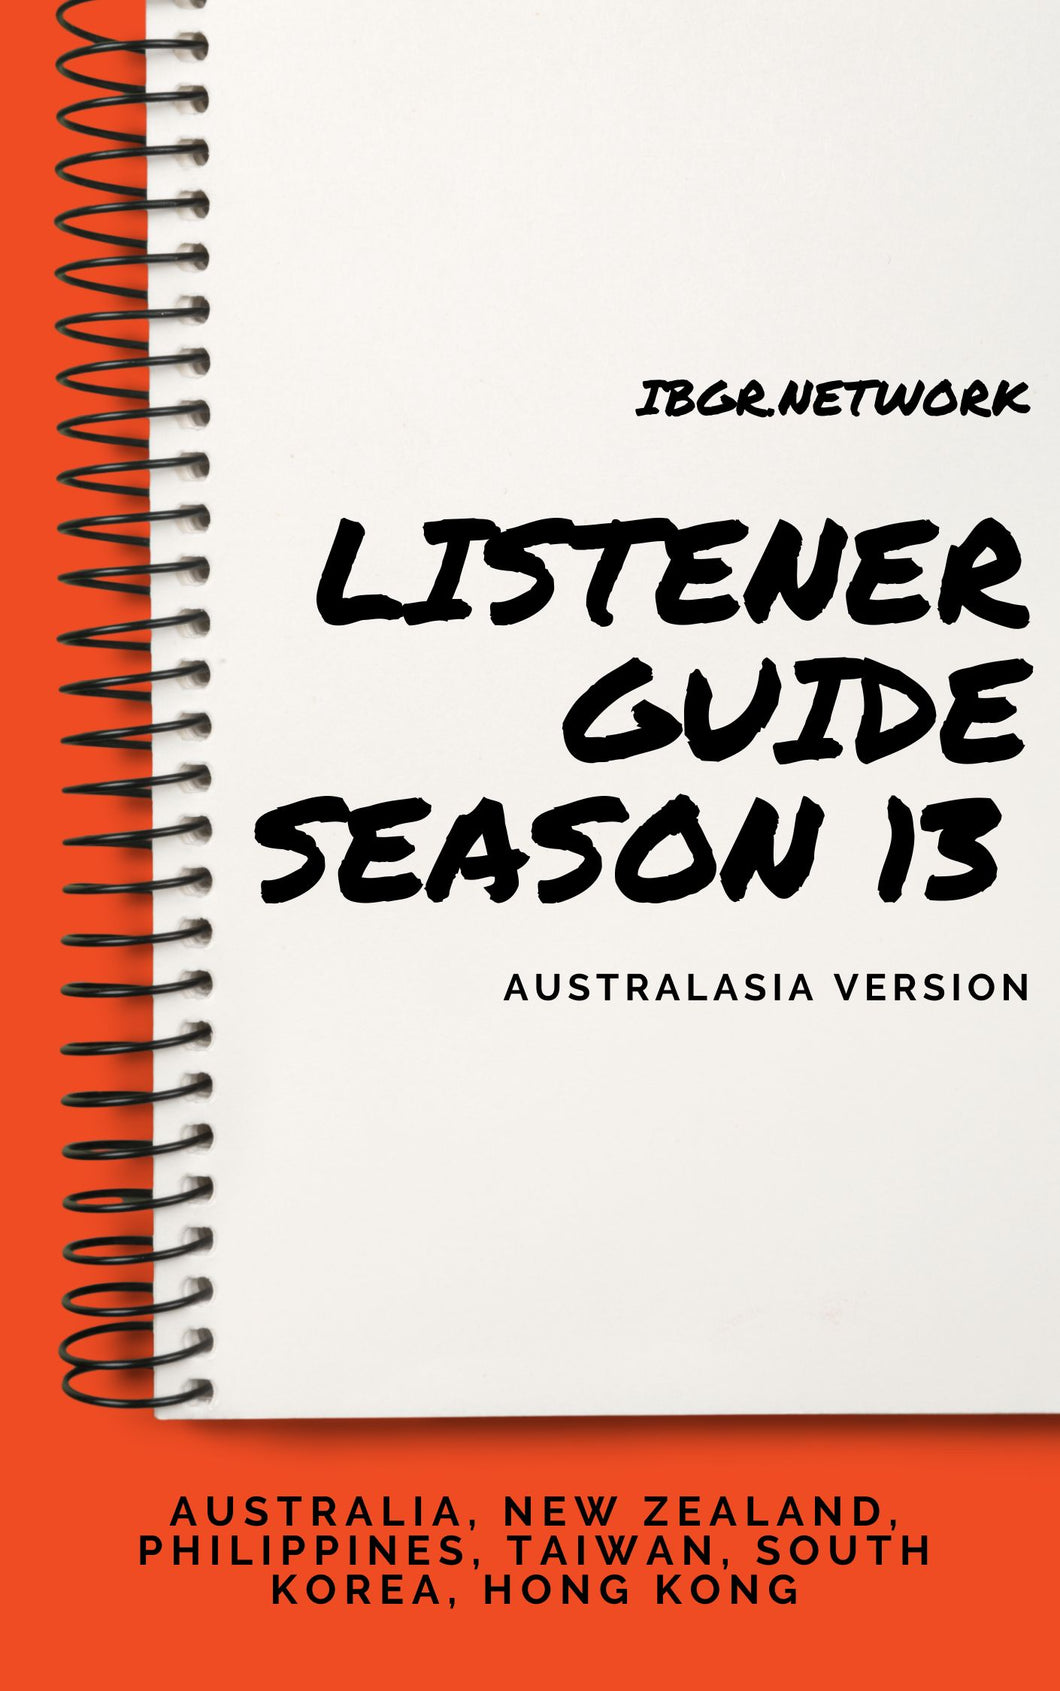 [EBOOK] Season 13 Listener Guide 13.3 - Australasia Version